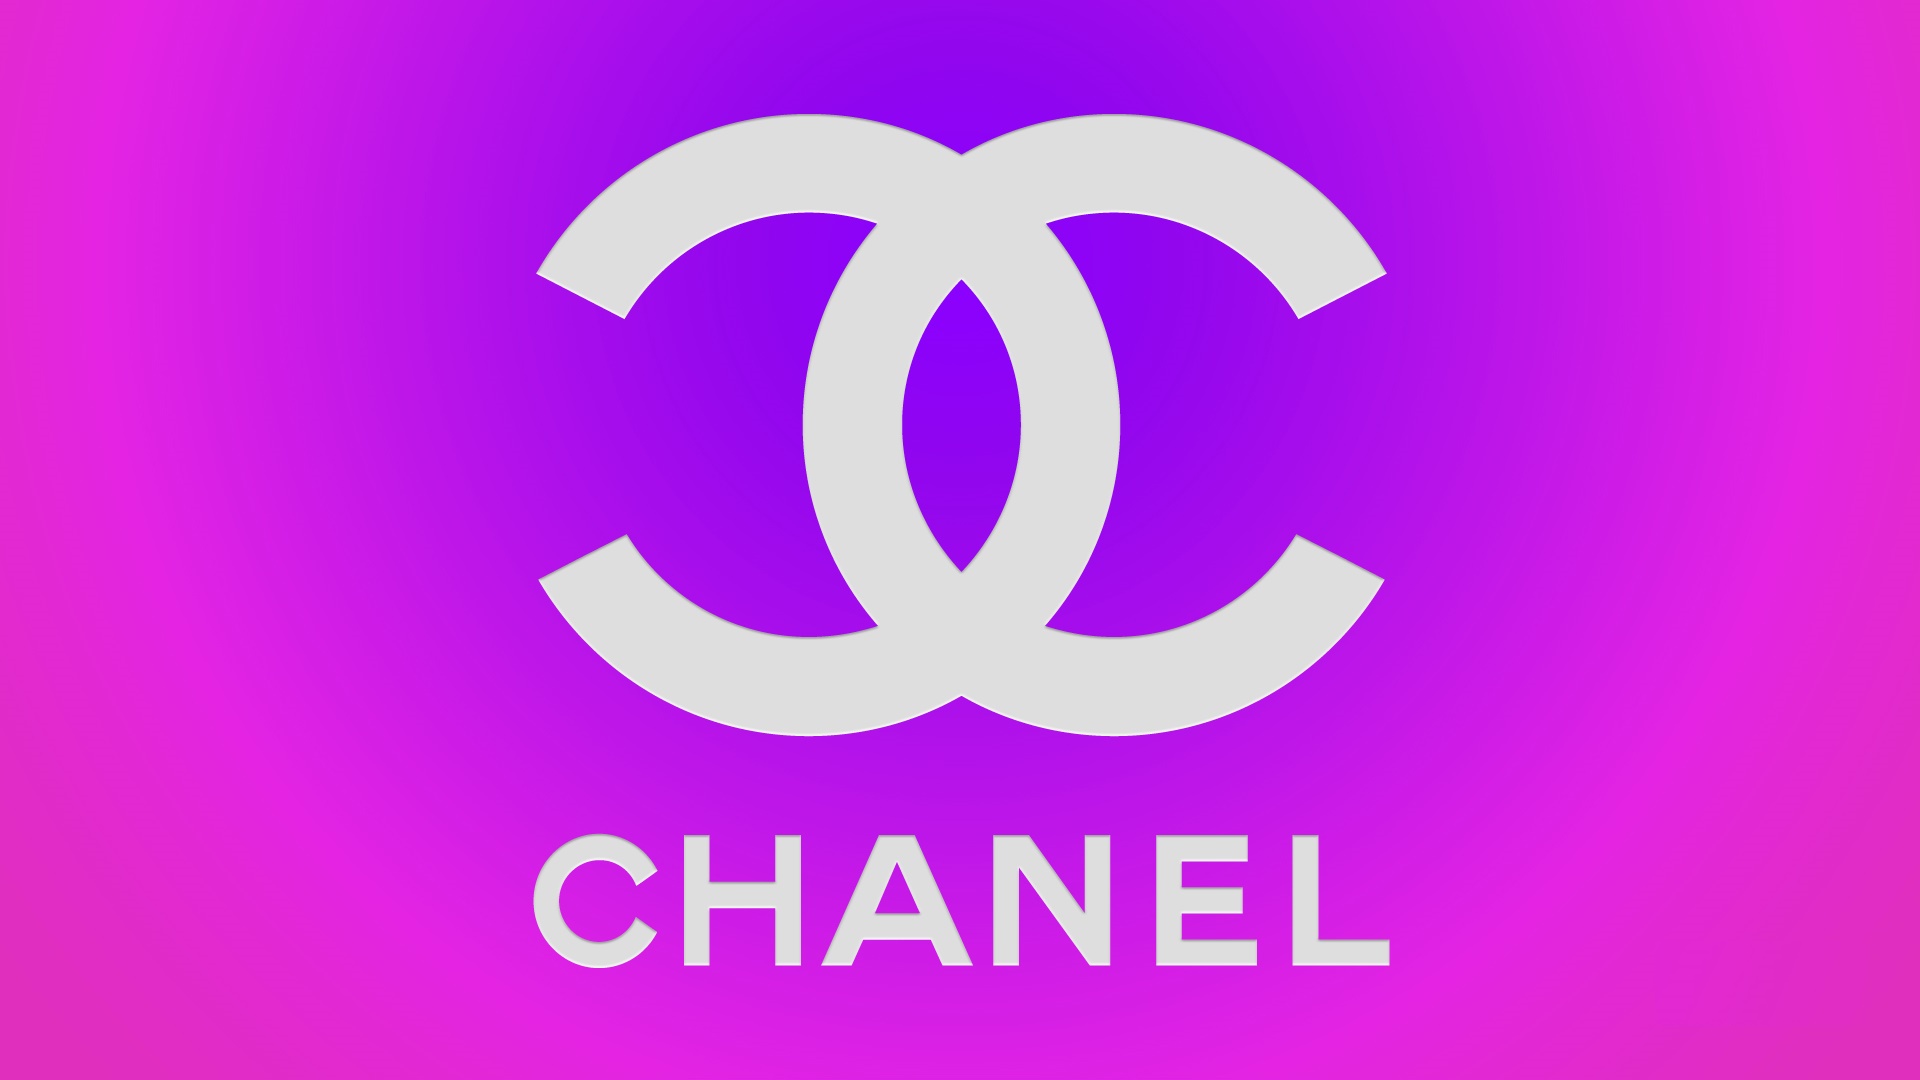 Melting Chanel logo free image download